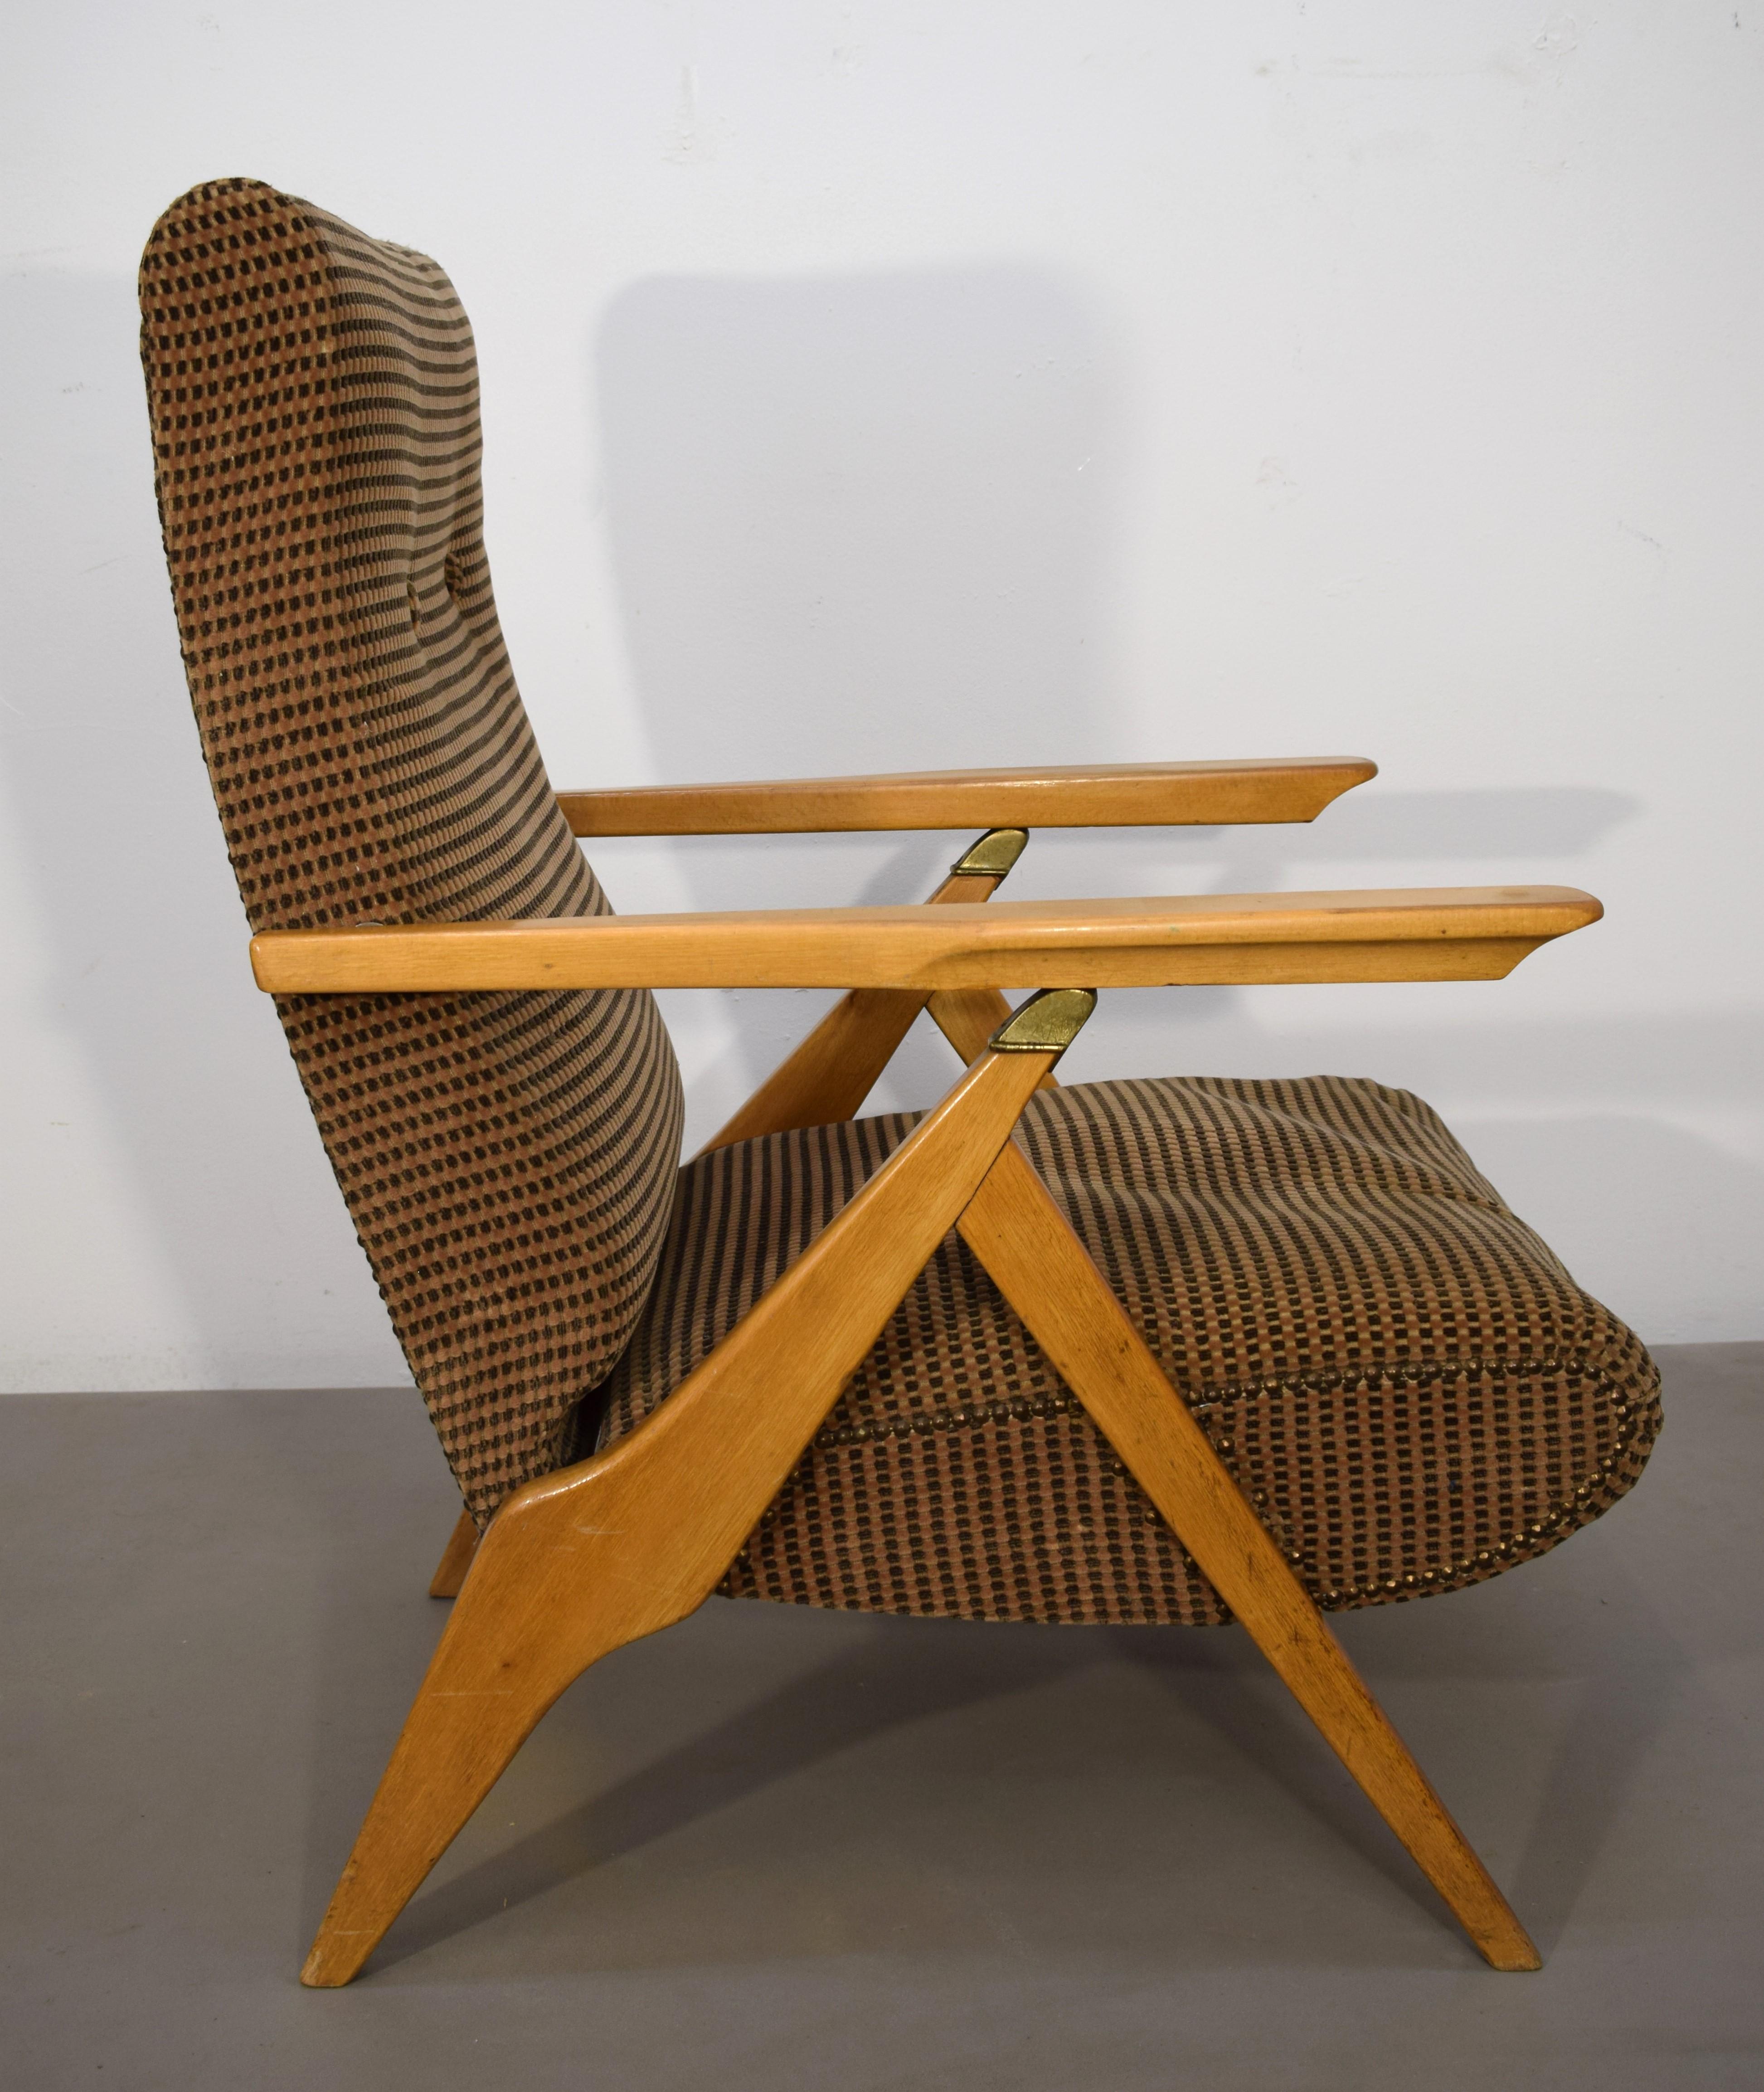 Italian reclining armchair by Antonio Gorgone, 1950s.
Dimensions: 
H= 96 cm; W= 63 cm; D min 75 cm; D max = 100 cm; H seat= 40 cm.